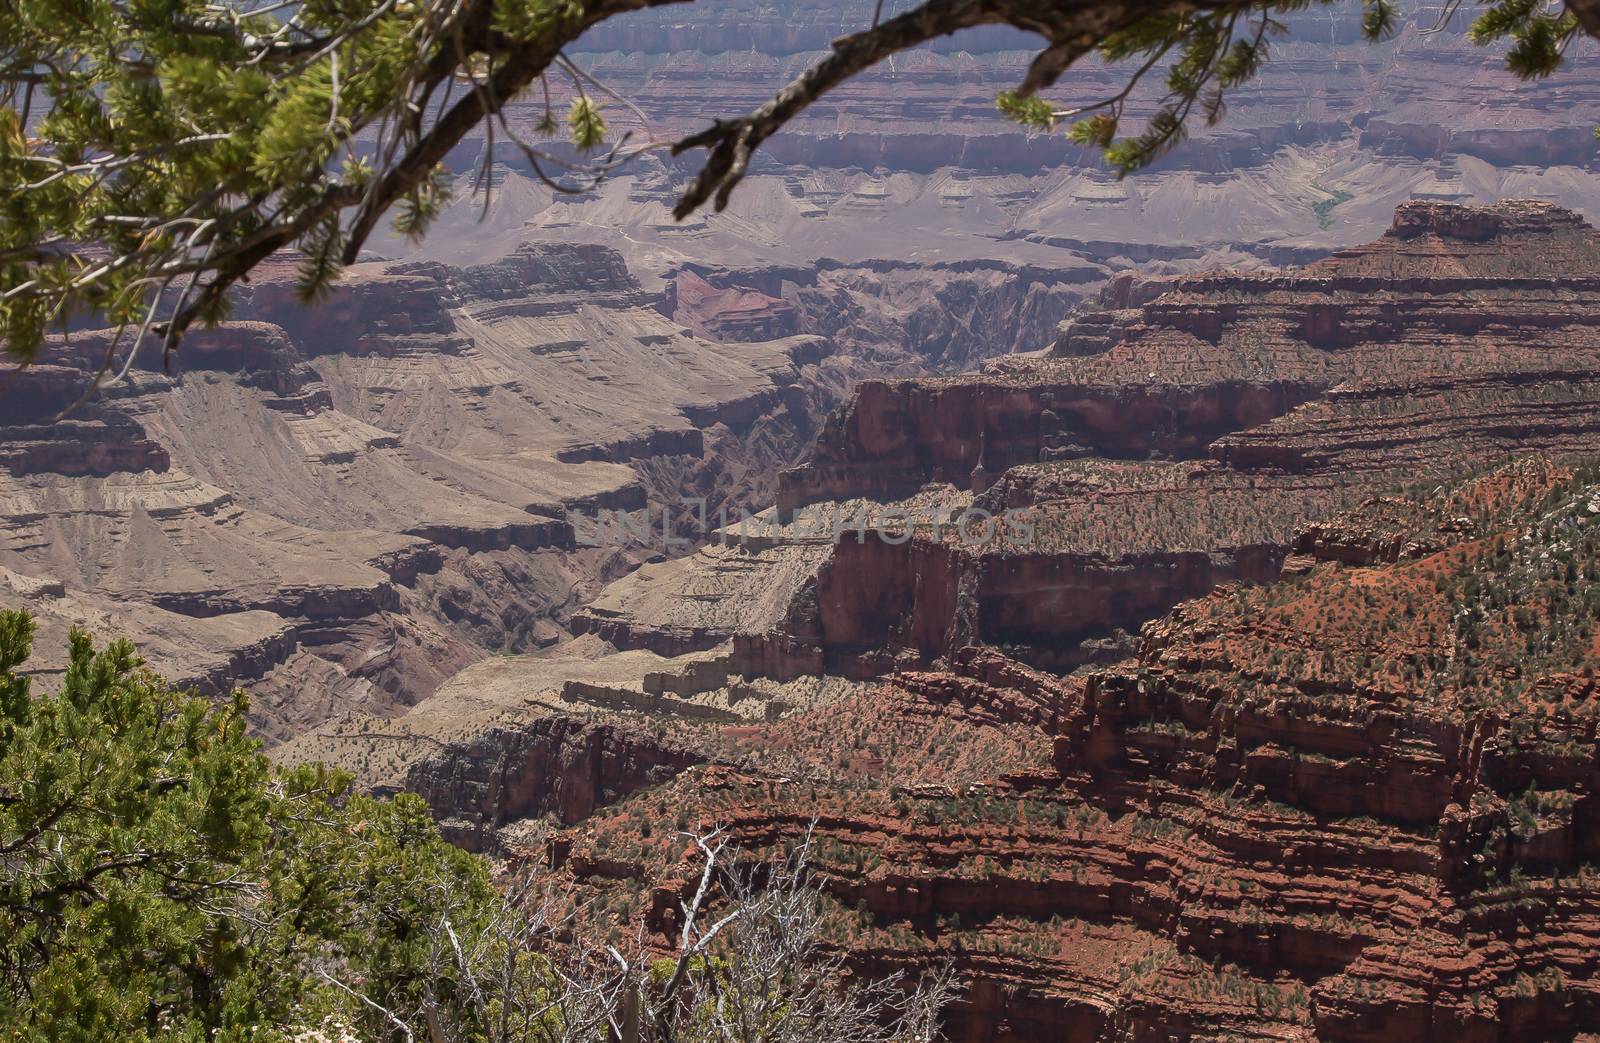 North Rim of the Grand Canyon by teacherdad48@yahoo.com